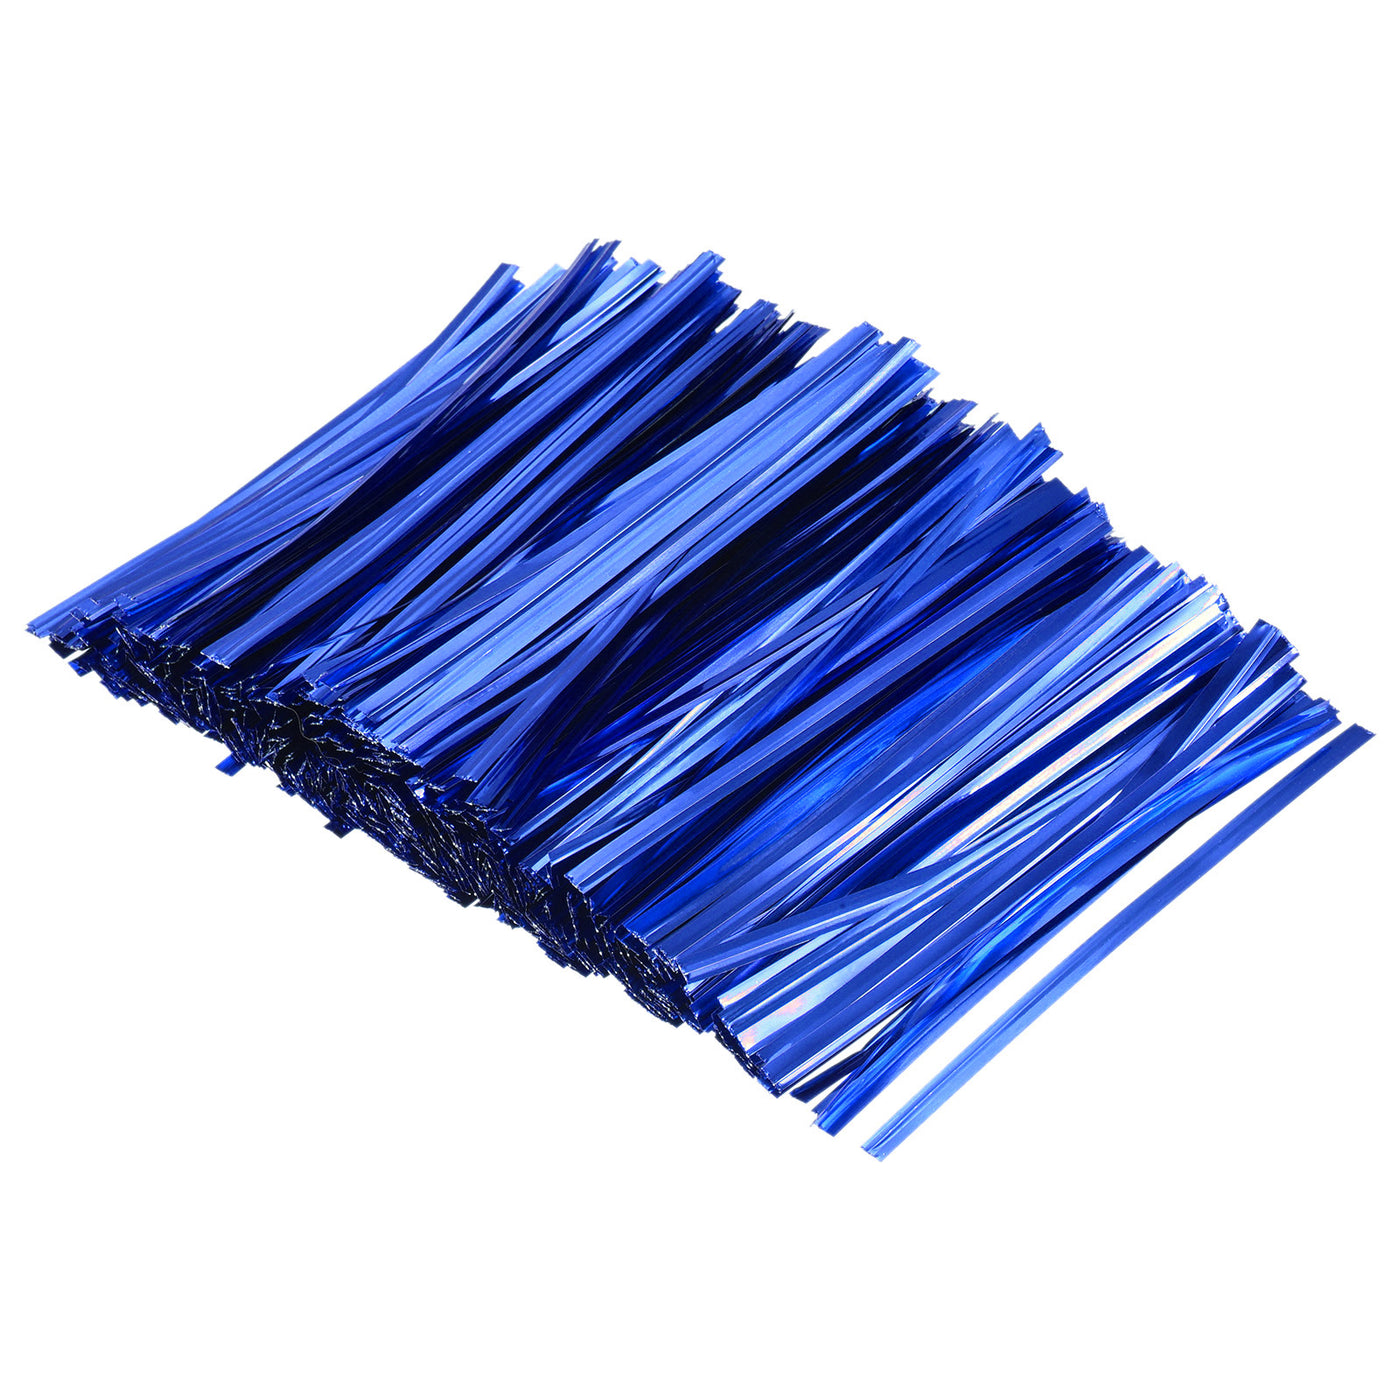 Harfington Foil Twist Ties 4" Plastic Closure Tie for Bread, Candy Blue 750pcs